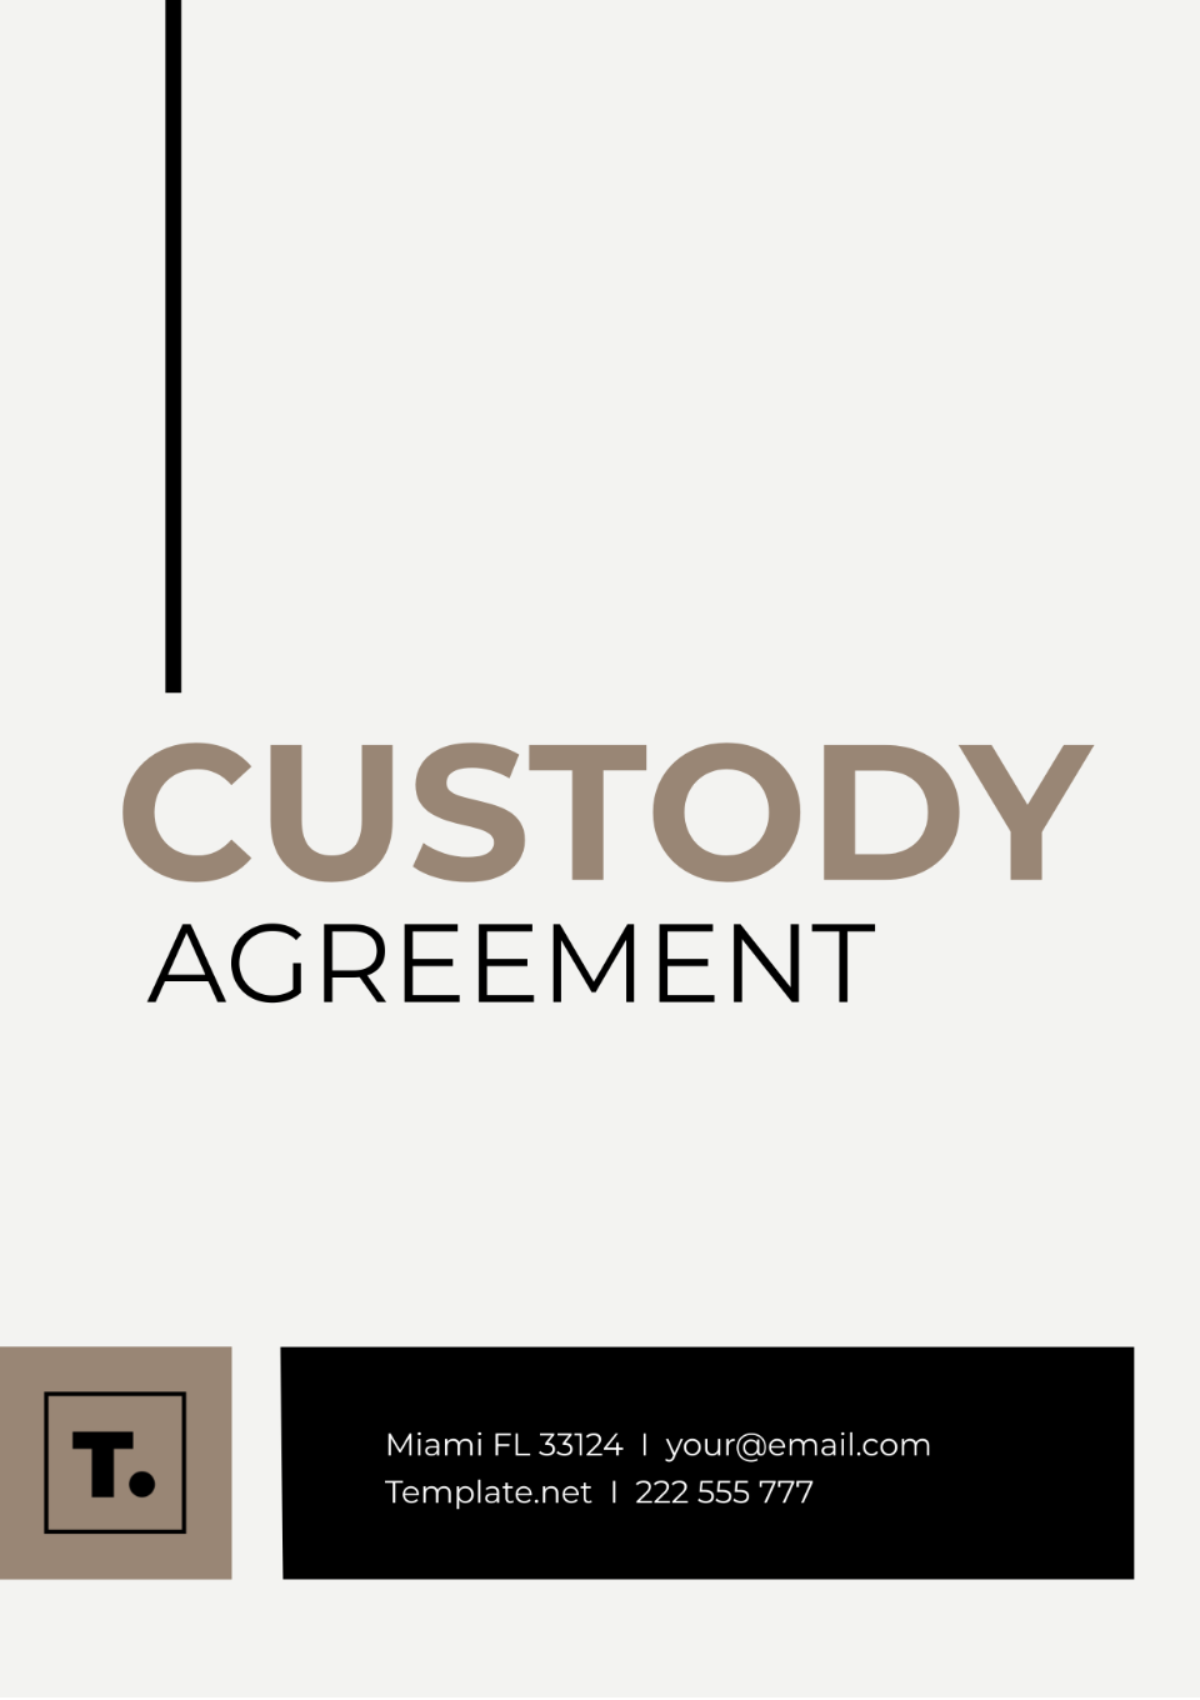 Custody Agreement Template